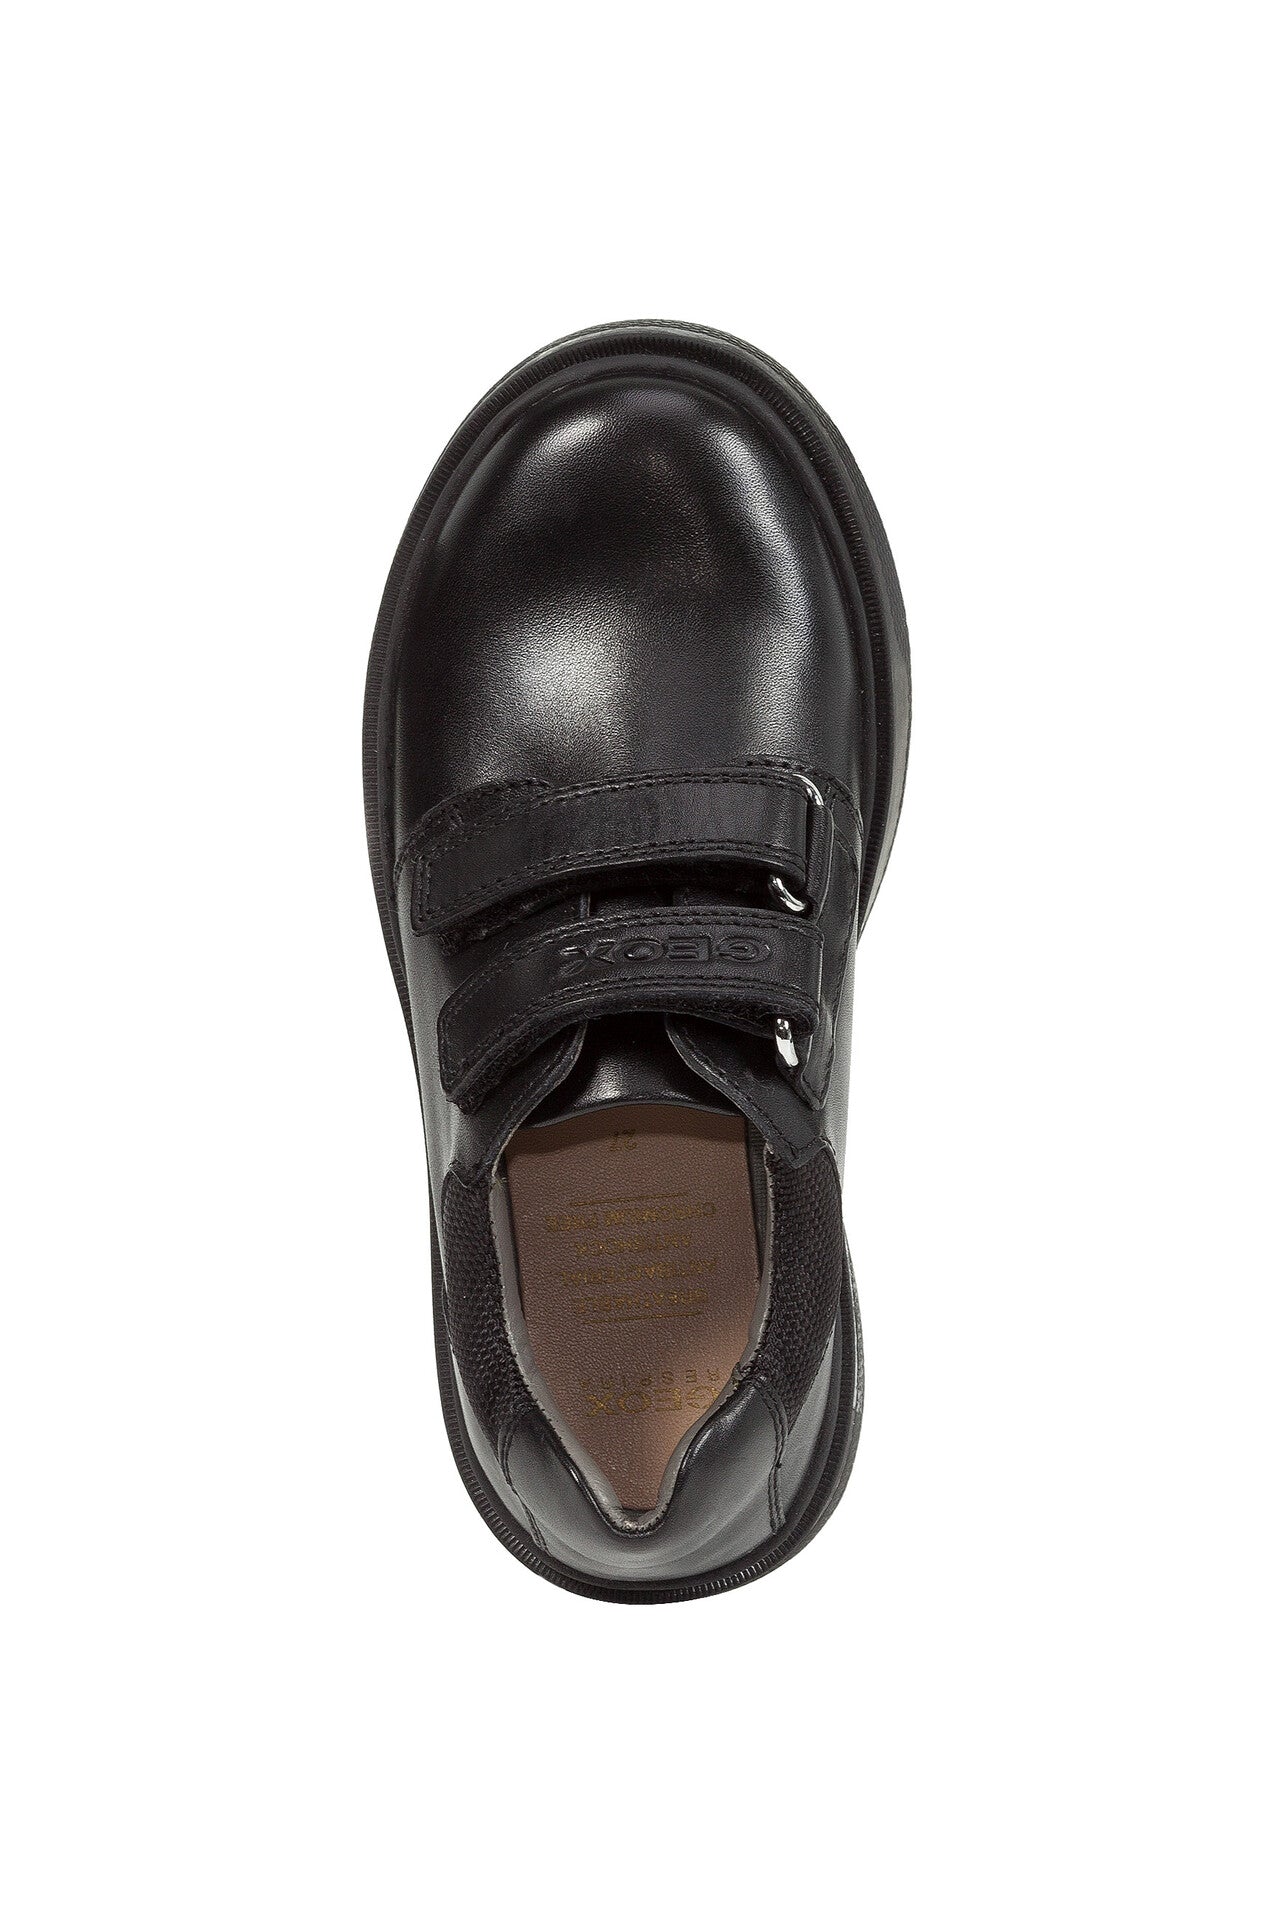 Riddock B H Black Leather Boys School Shoe